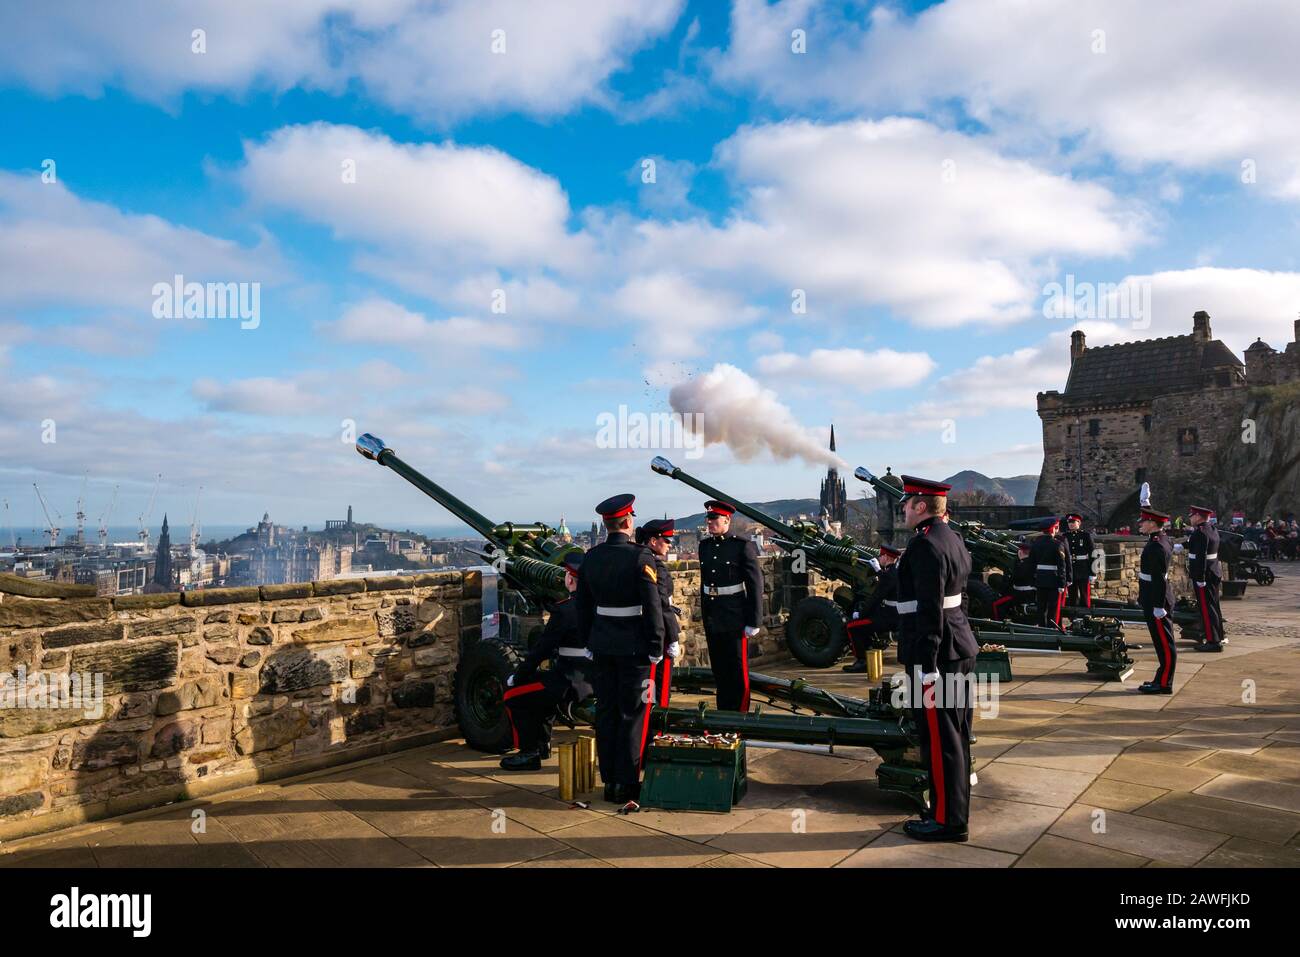 21 gun salute marking HM Queen Elizabeth's accession to the throne in 2020, Edinburgh Castle, Scotland, UK Stock Photo